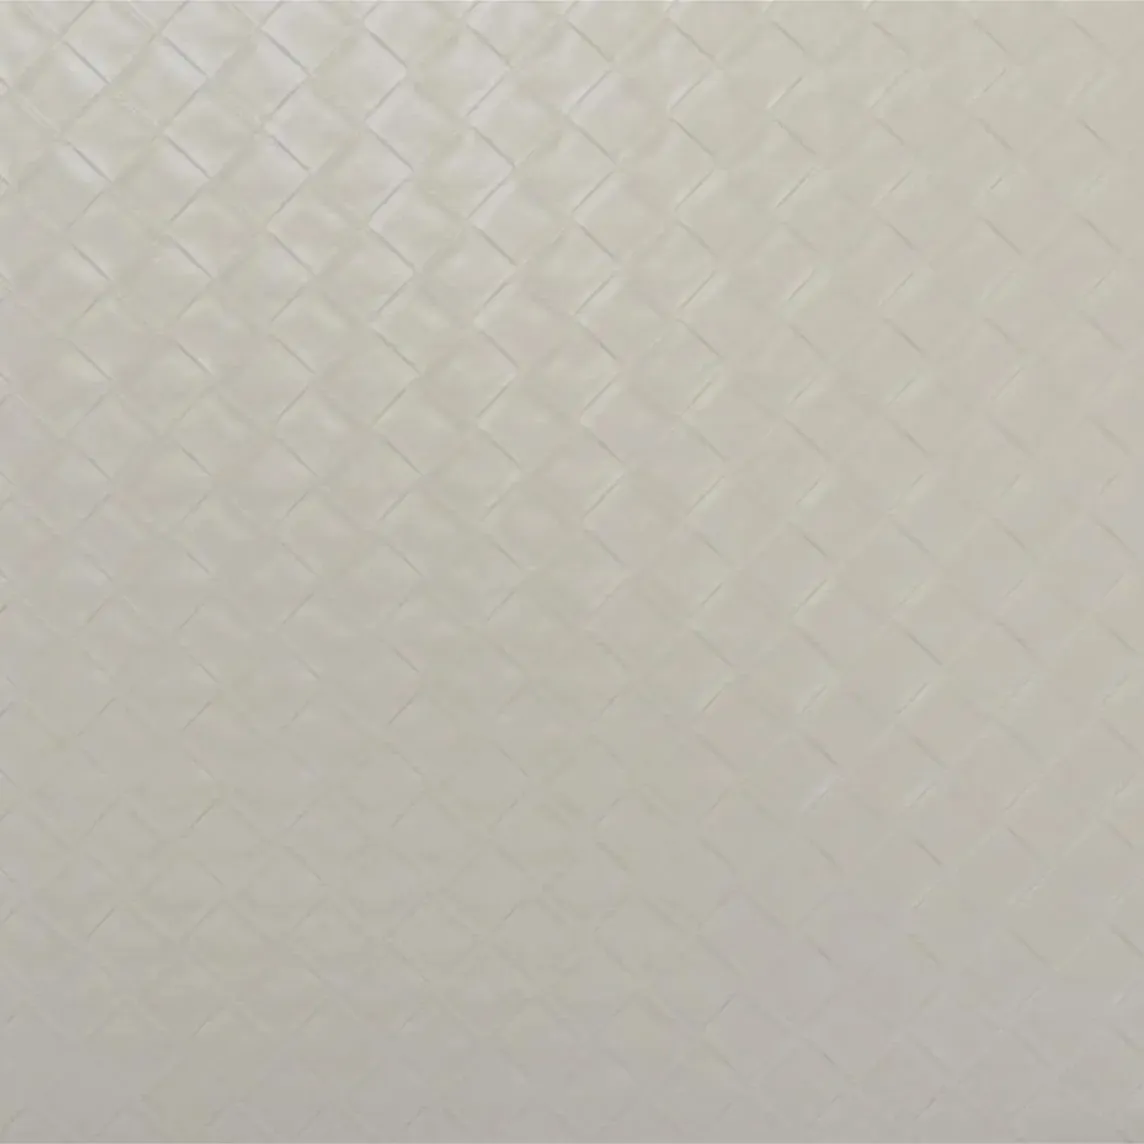 Black Vacuum Press Film Decorative White Diamond Square Pattern PVC Wallpaper Lamination PVC Film for Door